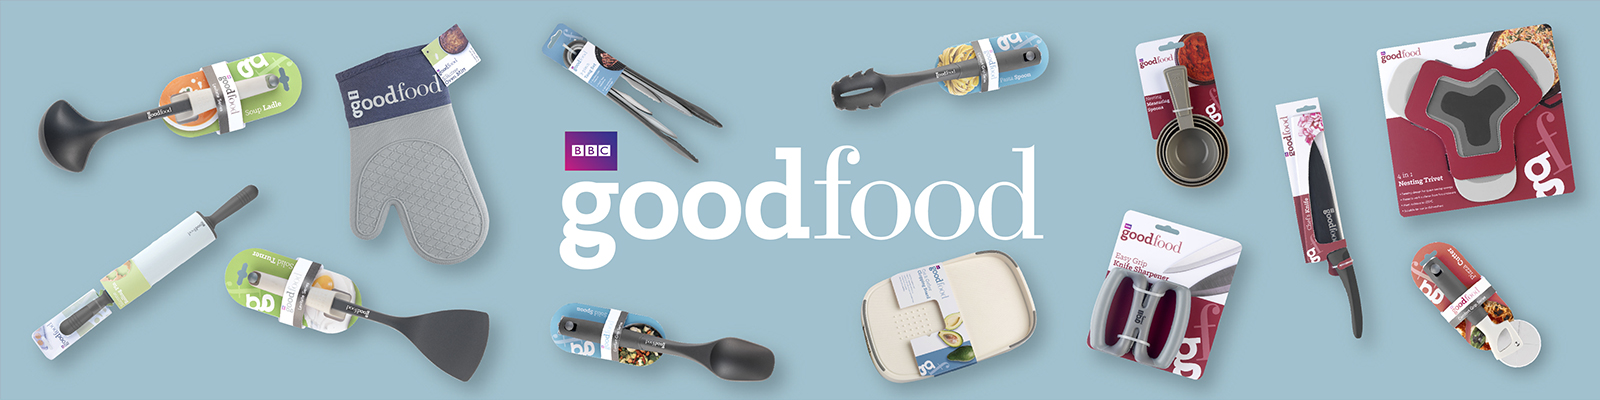 BBC Good Food Logo